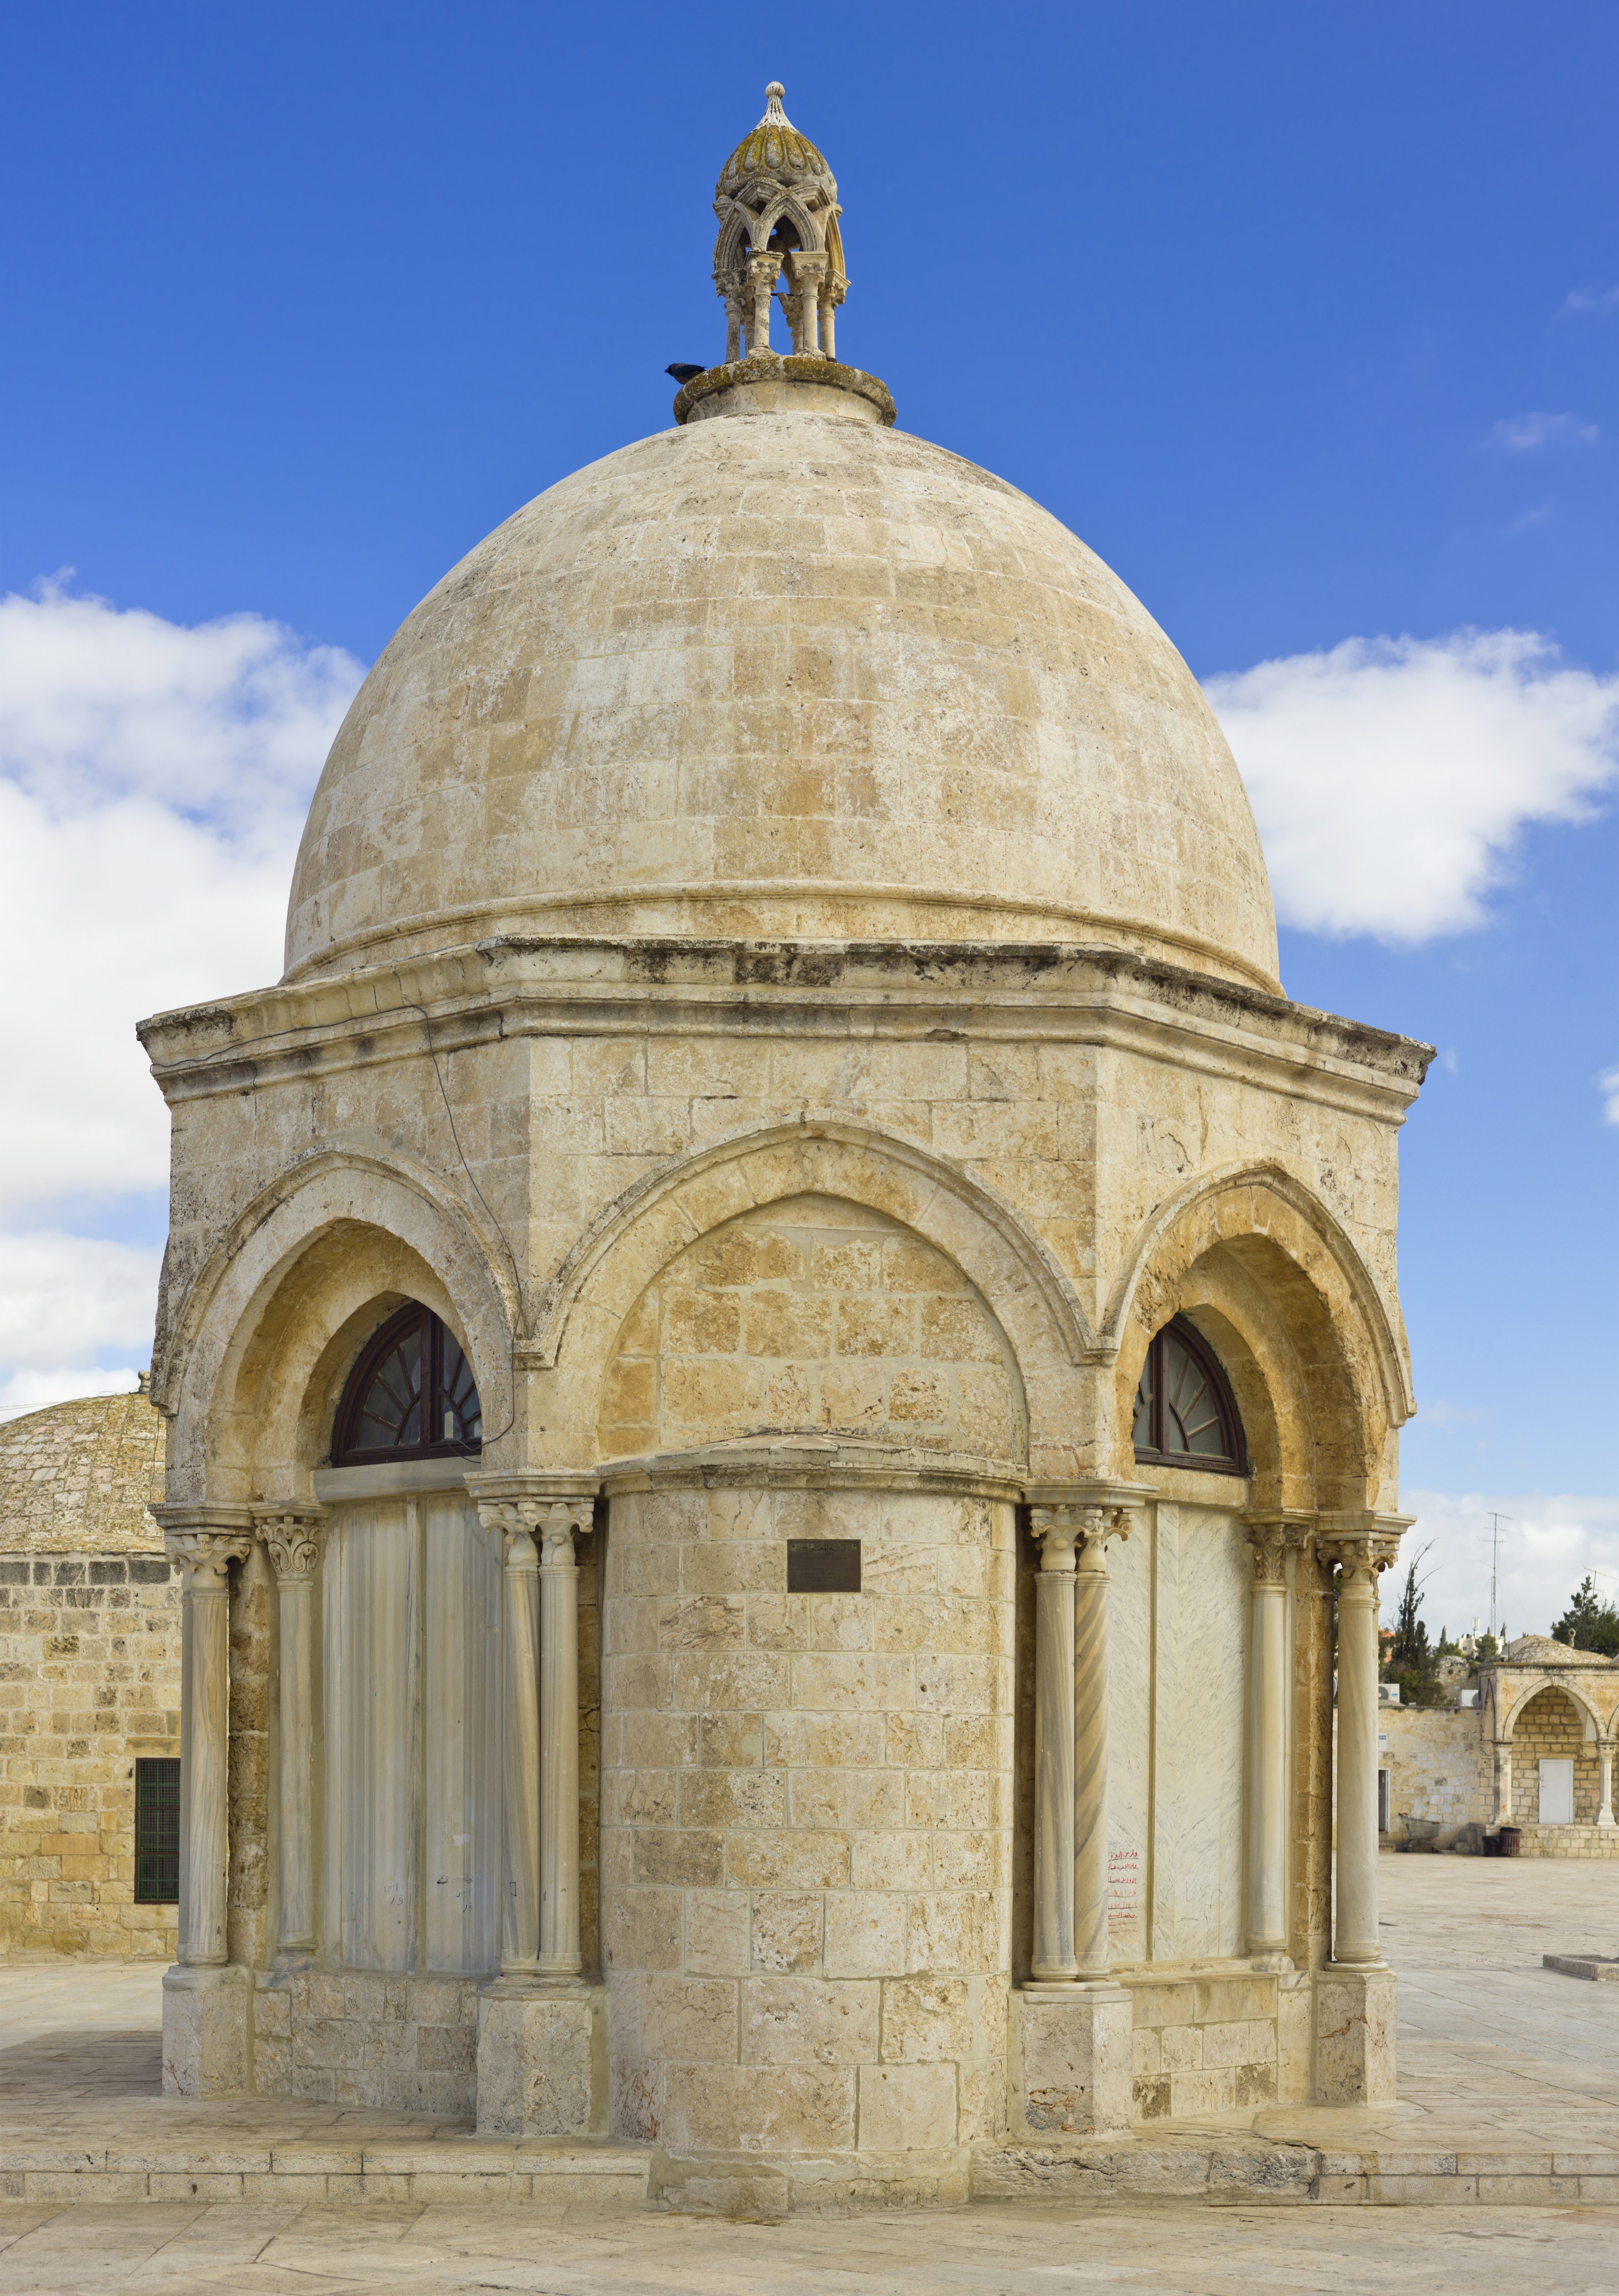 Israel-2013-Jerusalem-Temple Mount-Dome of the Ascension 04